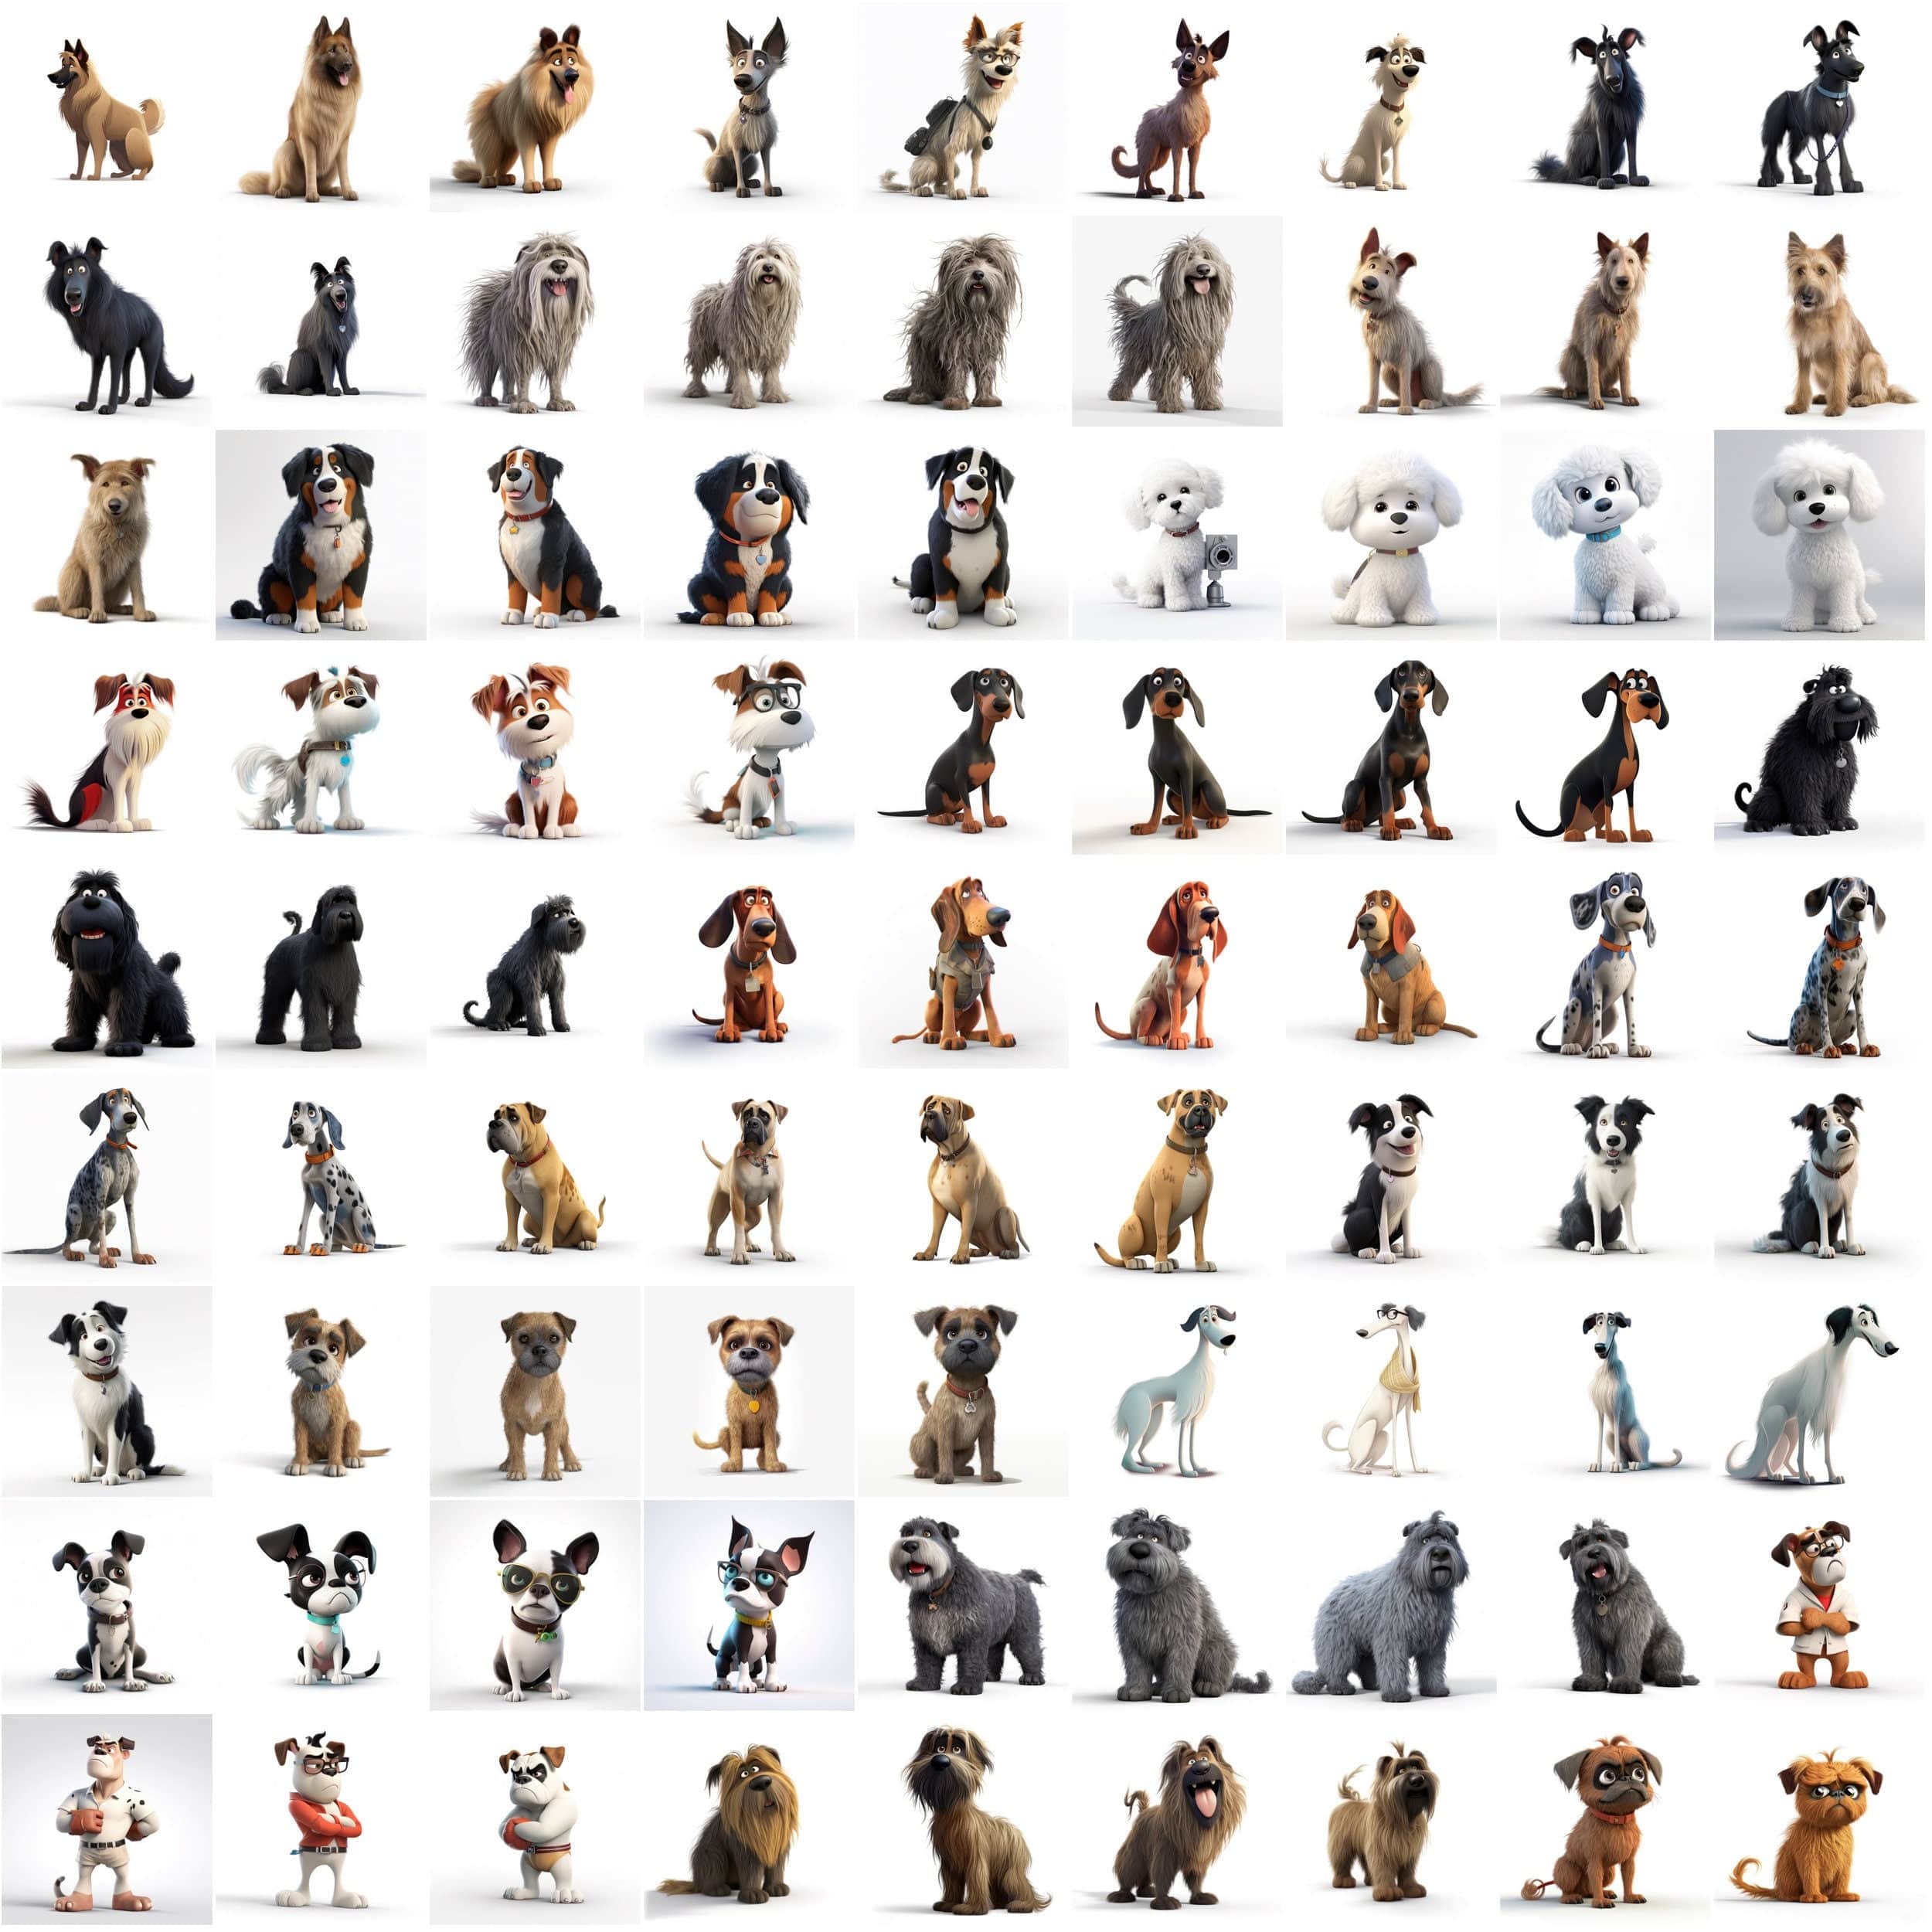 750 Cute Dog Breed Images Bundle - Digital Art Collection for Dog Lovers, Scrapbooking, and Crafts, Transparent PNG dog breed collection Digital Download Sumobundle